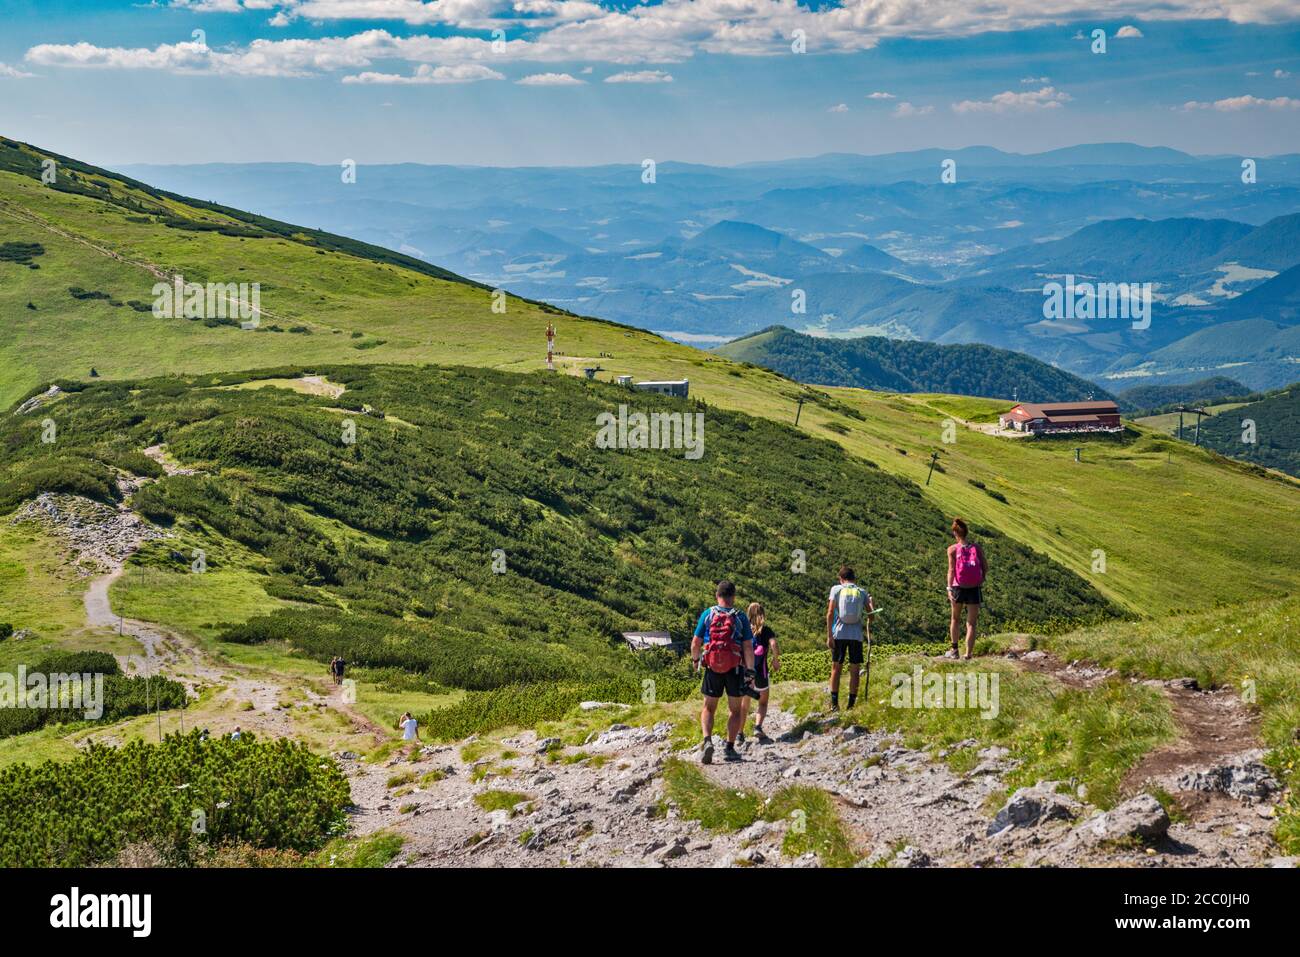 Velky Krivan massif on left, upper station of Vratna Chleb cable car, hikers on Chleb summit trail, Mala Fatra National Park, Zilina Region, Slovakia Stock Photo